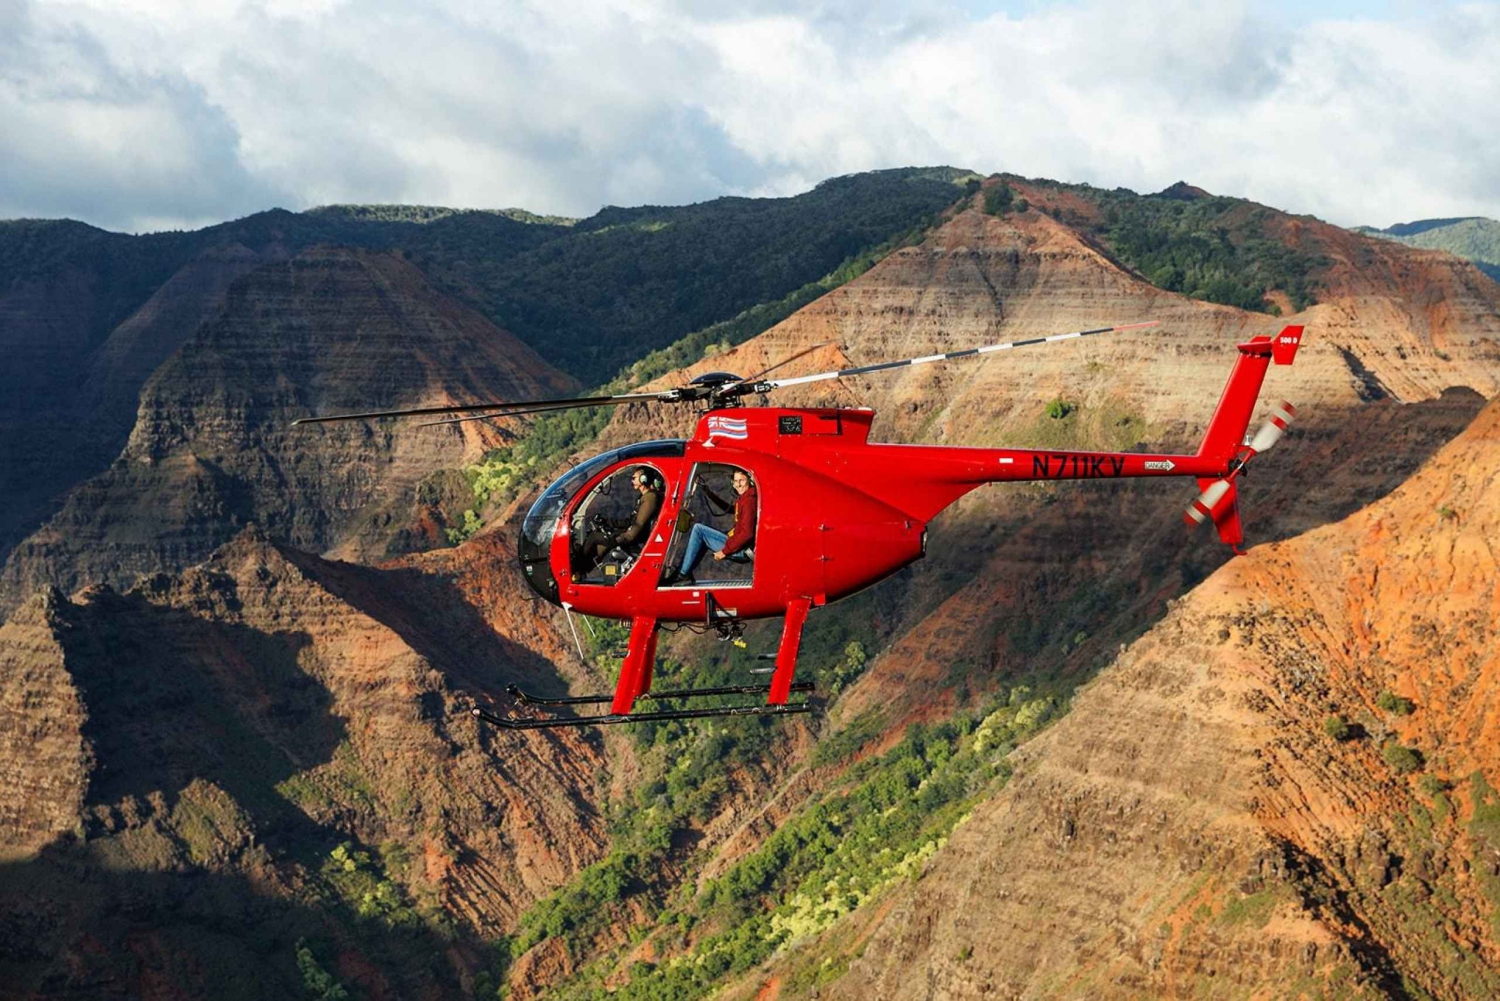 Kauai: Hughes 500 Doors-Off Helicopter with Window Seats